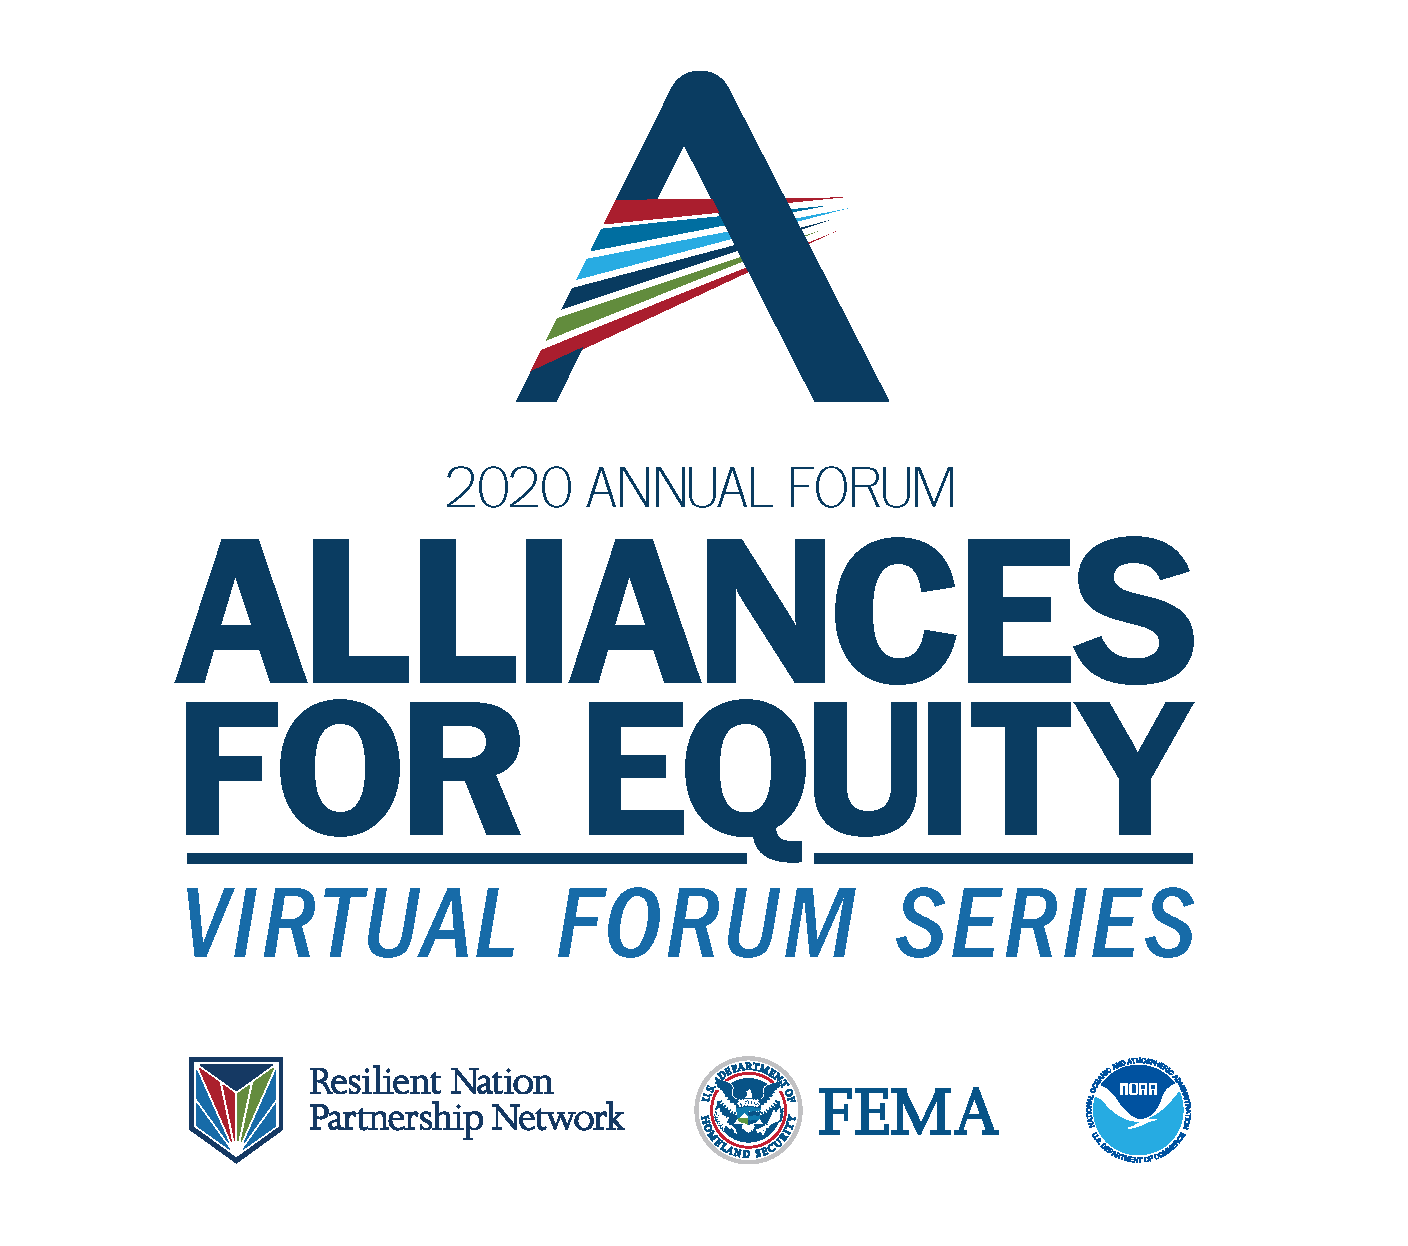 Alliance for Equity Virtual Forum Seris 